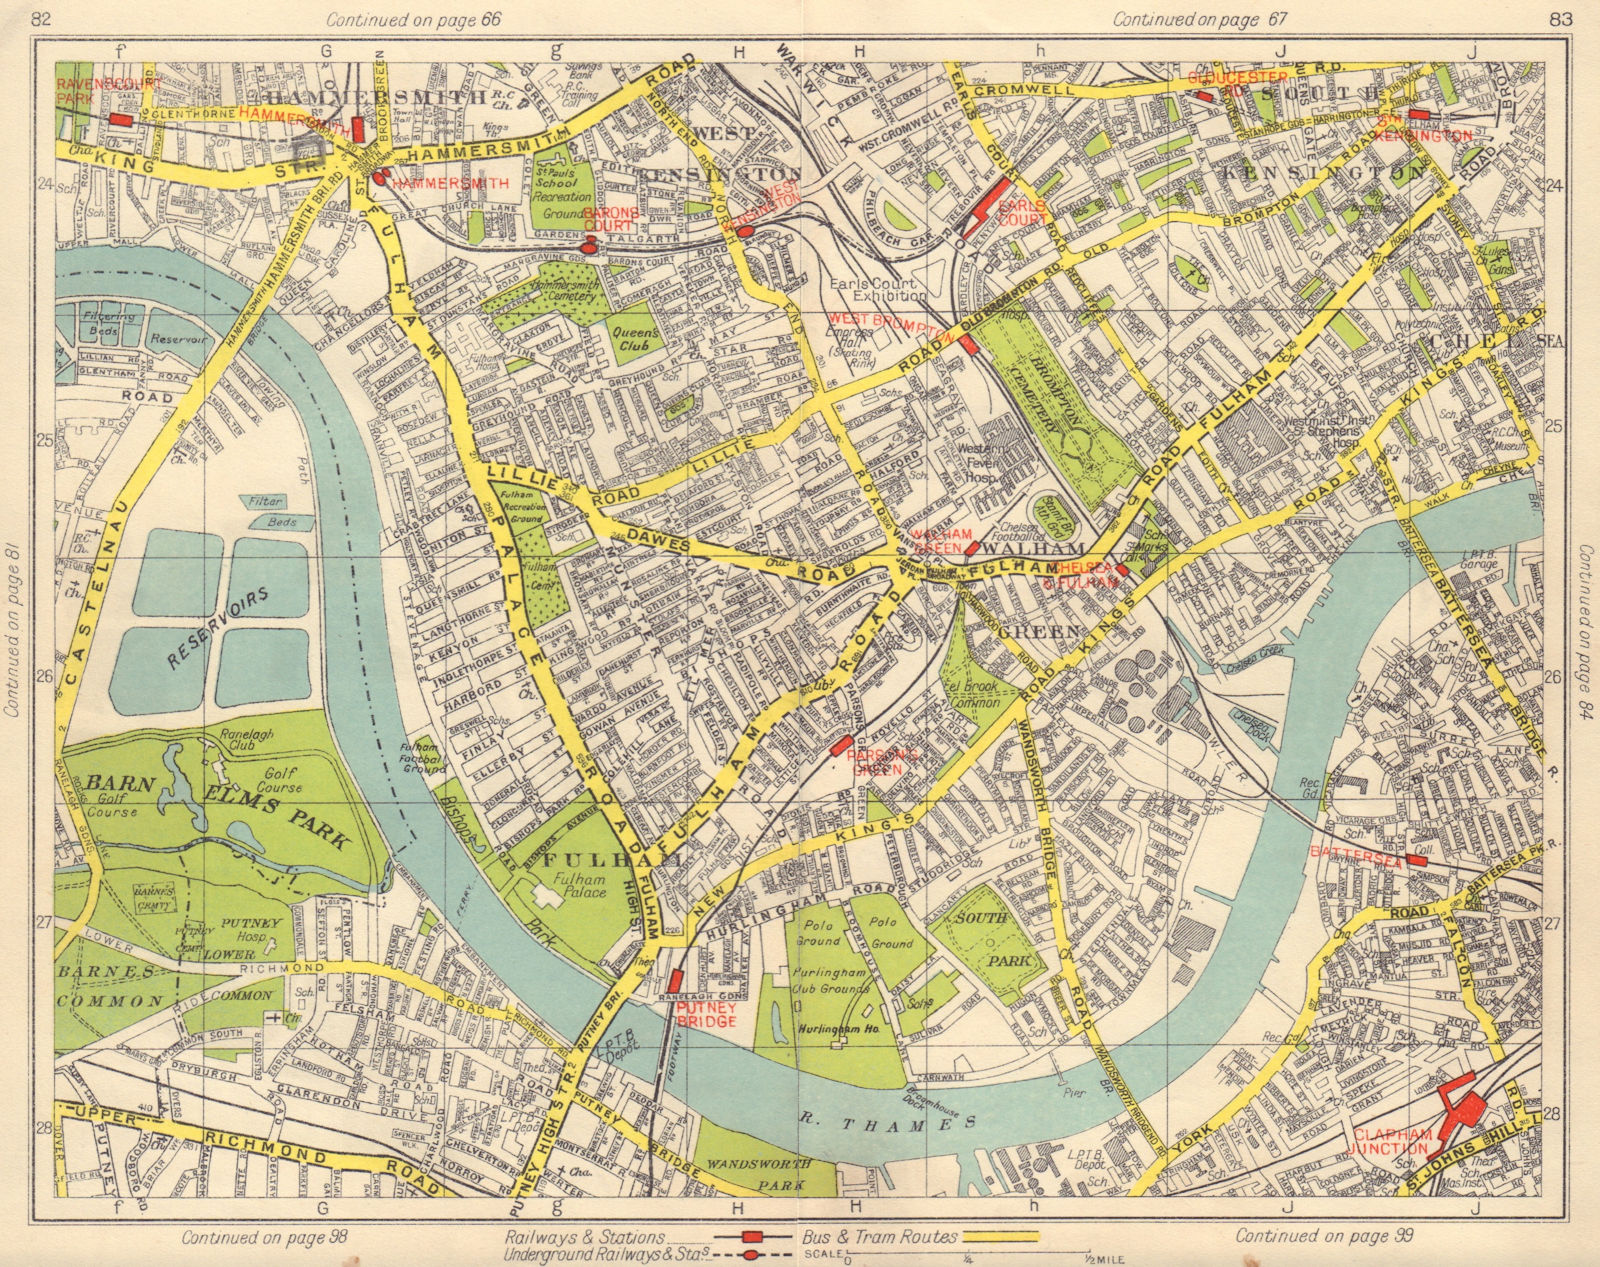 SW LONDON Fulham Walham Green Hammersmith South Kensington Earls Court 1948 map